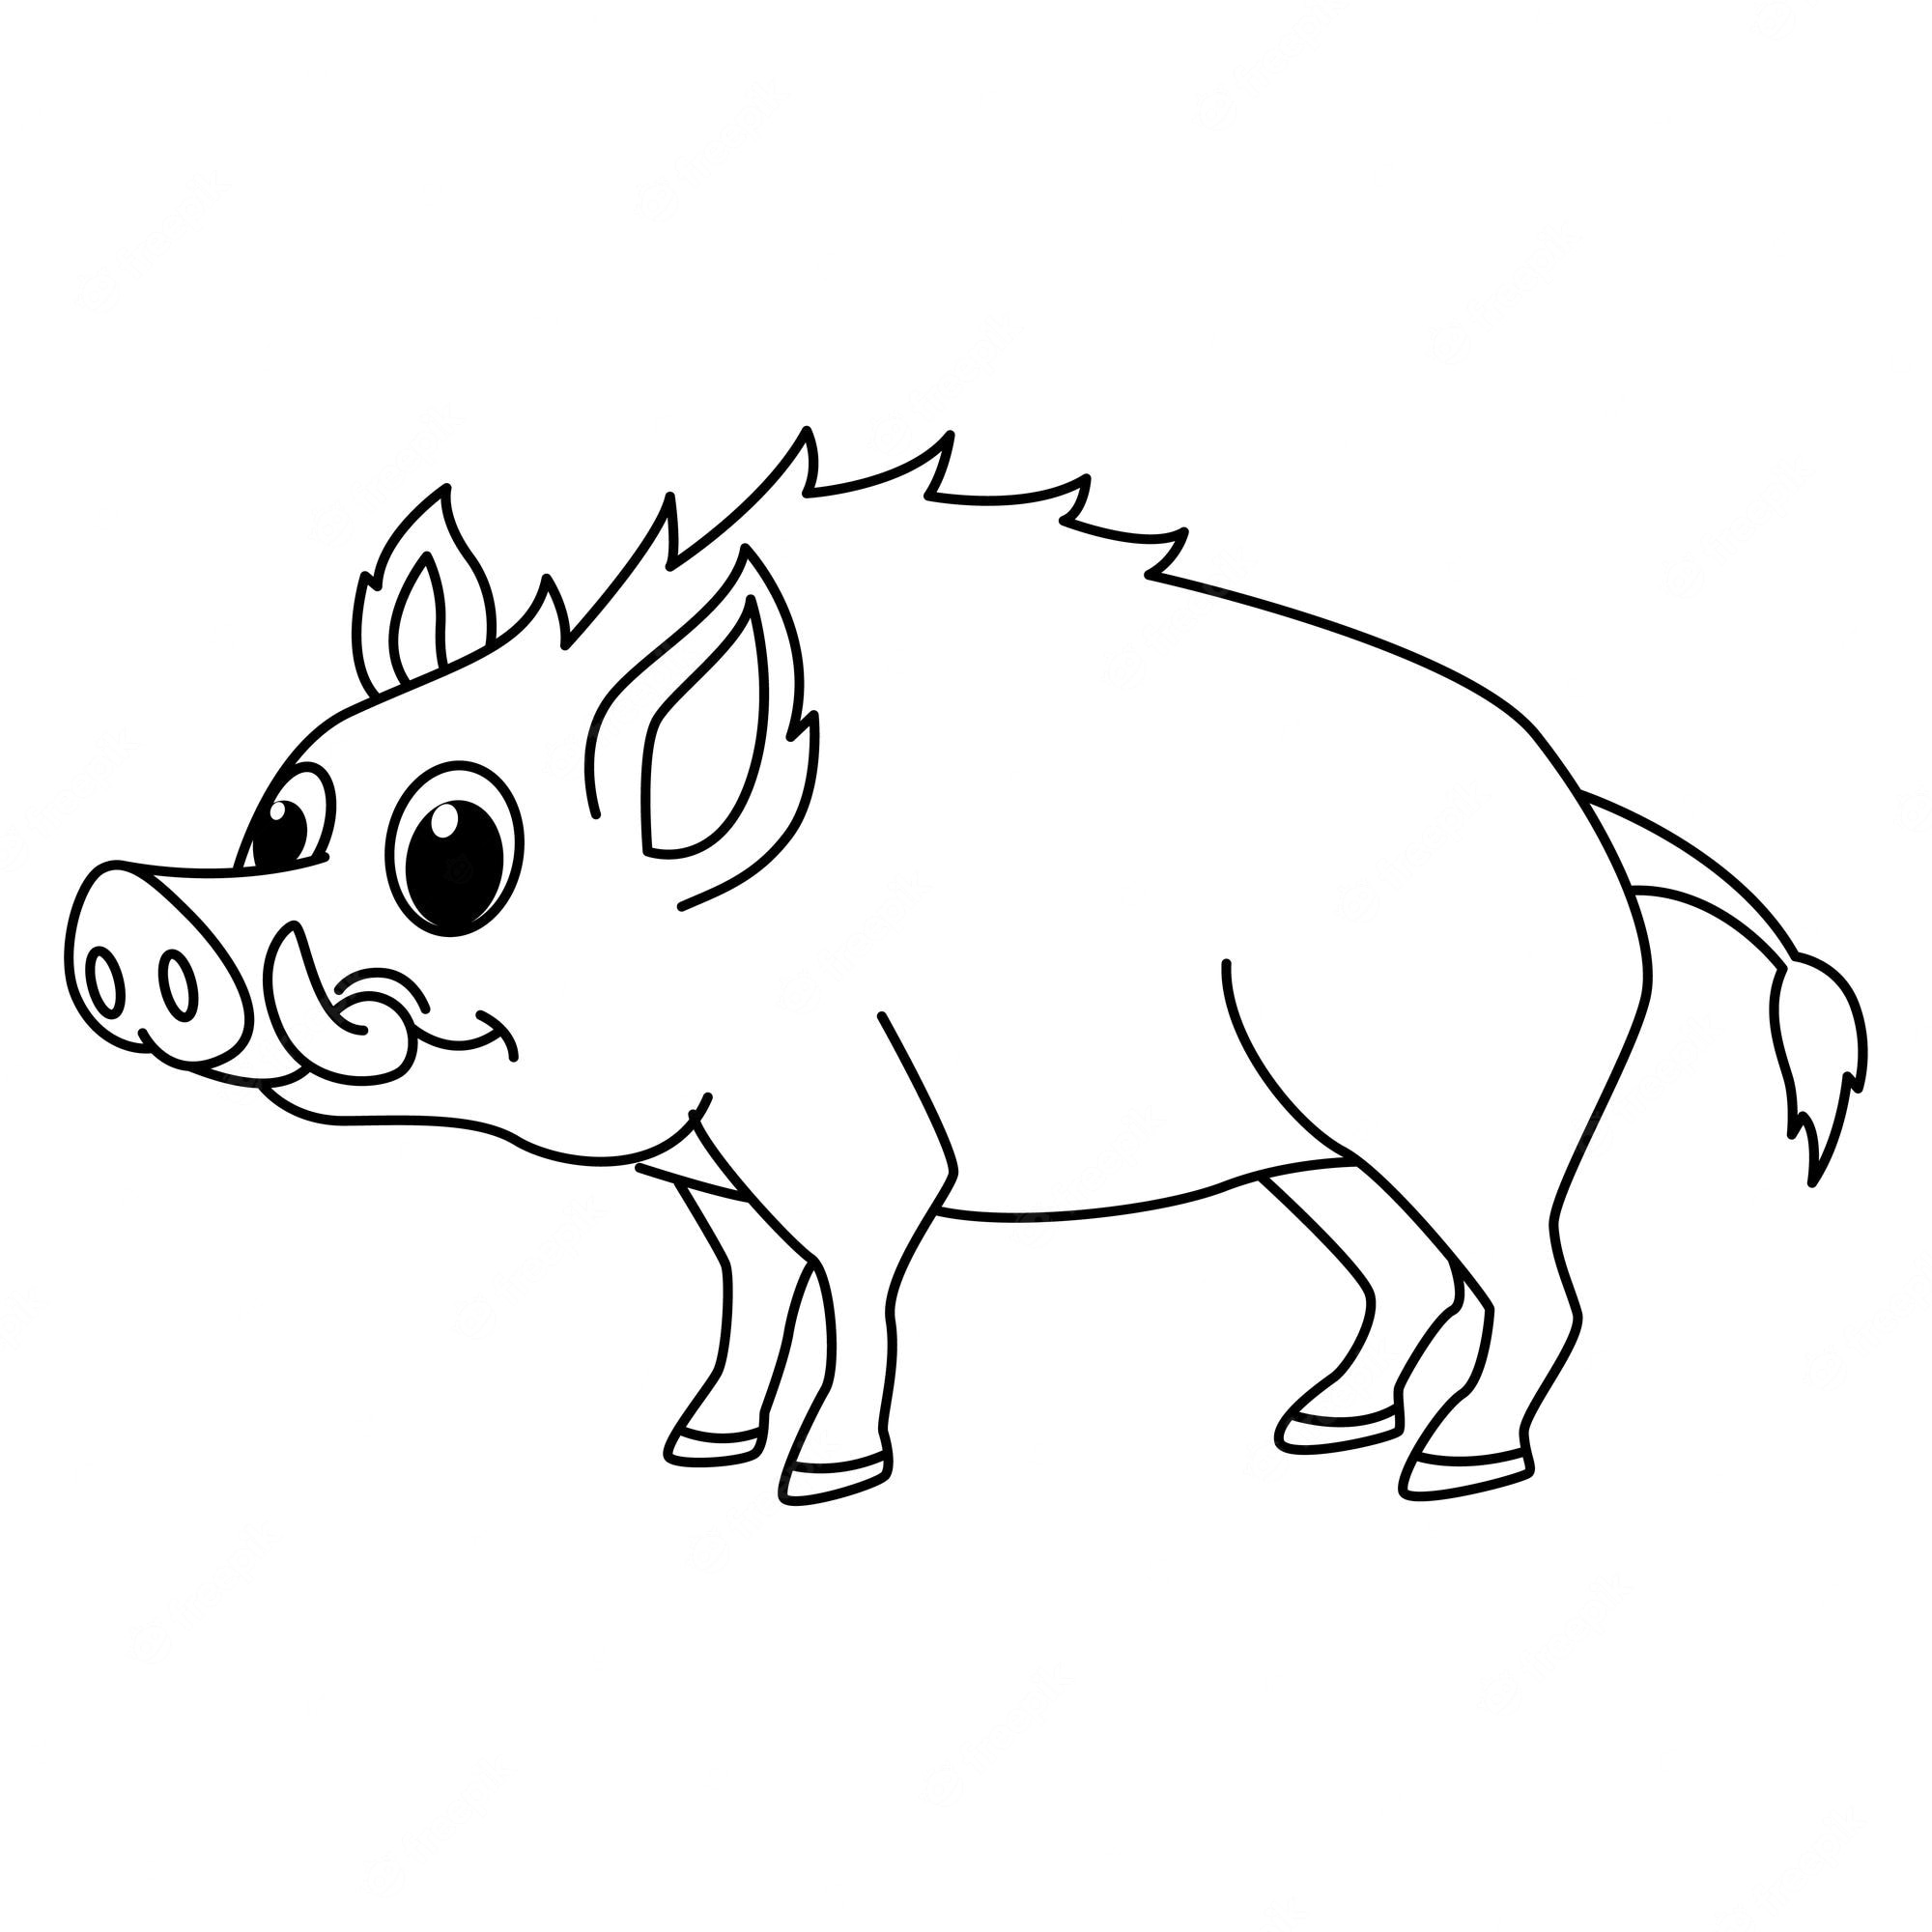 Premium Vector | Cute wild boar cartoon coloring page illustration vector  for kids coloring book